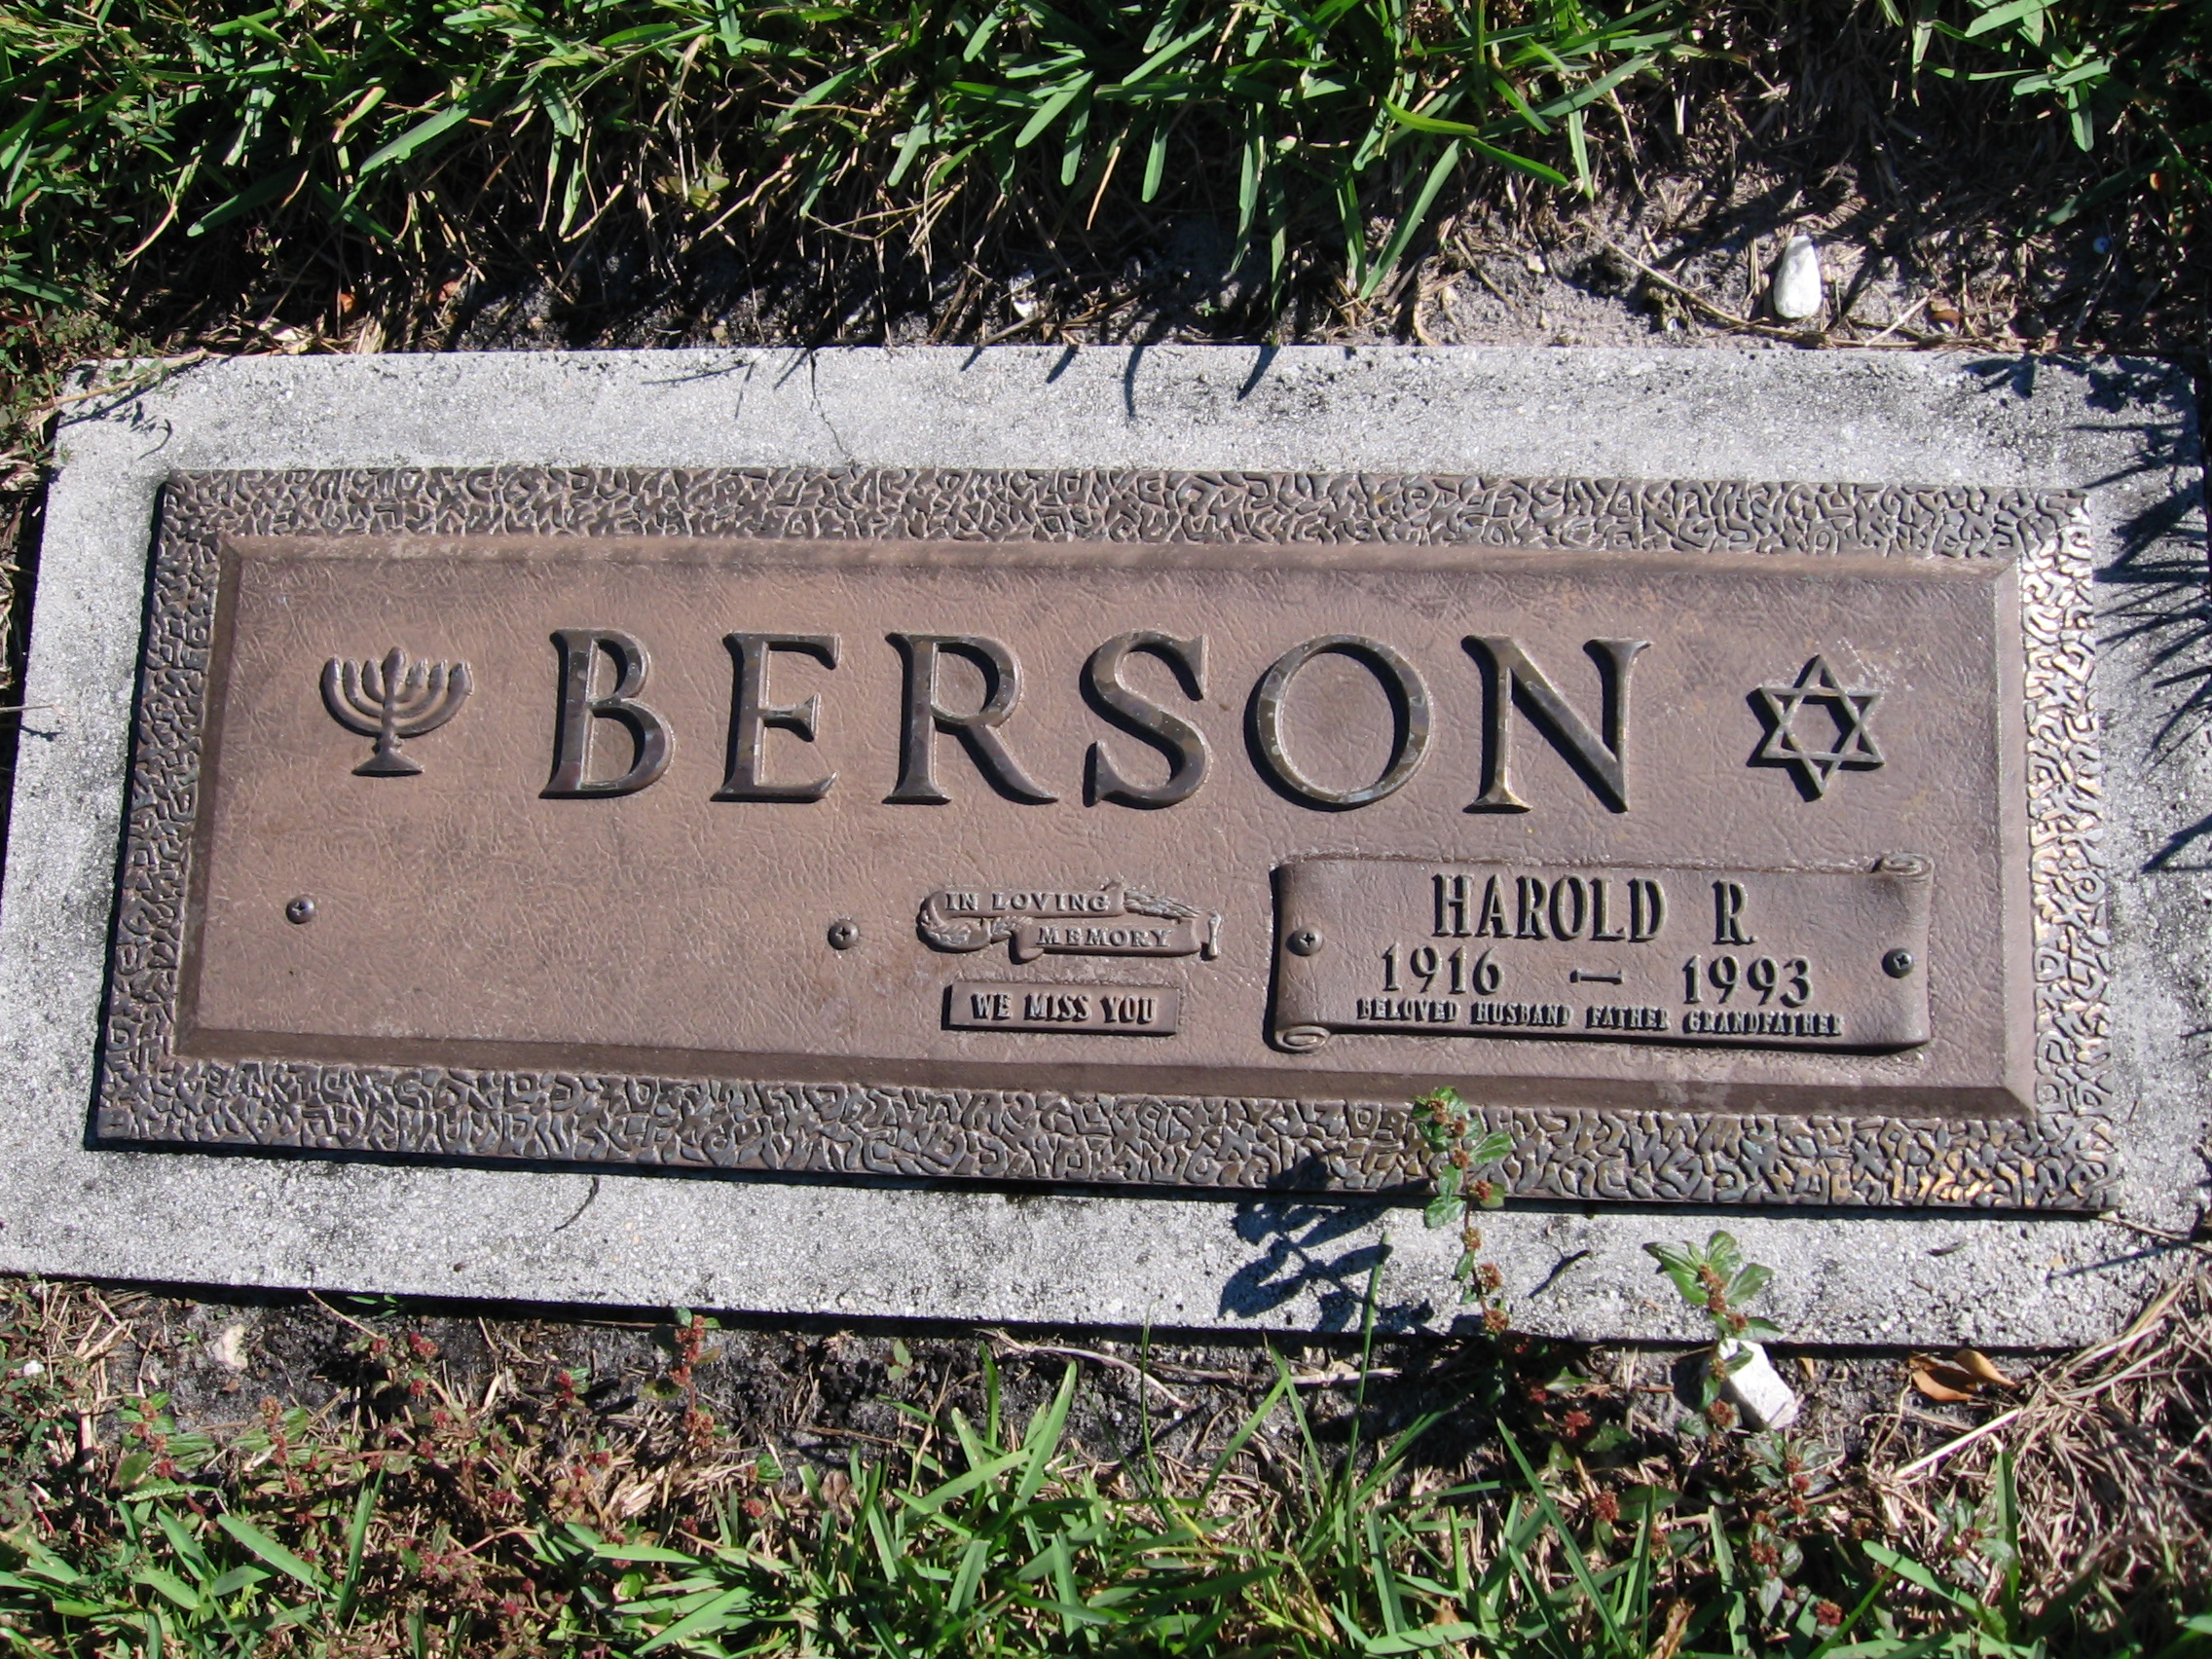 Harold R Berson